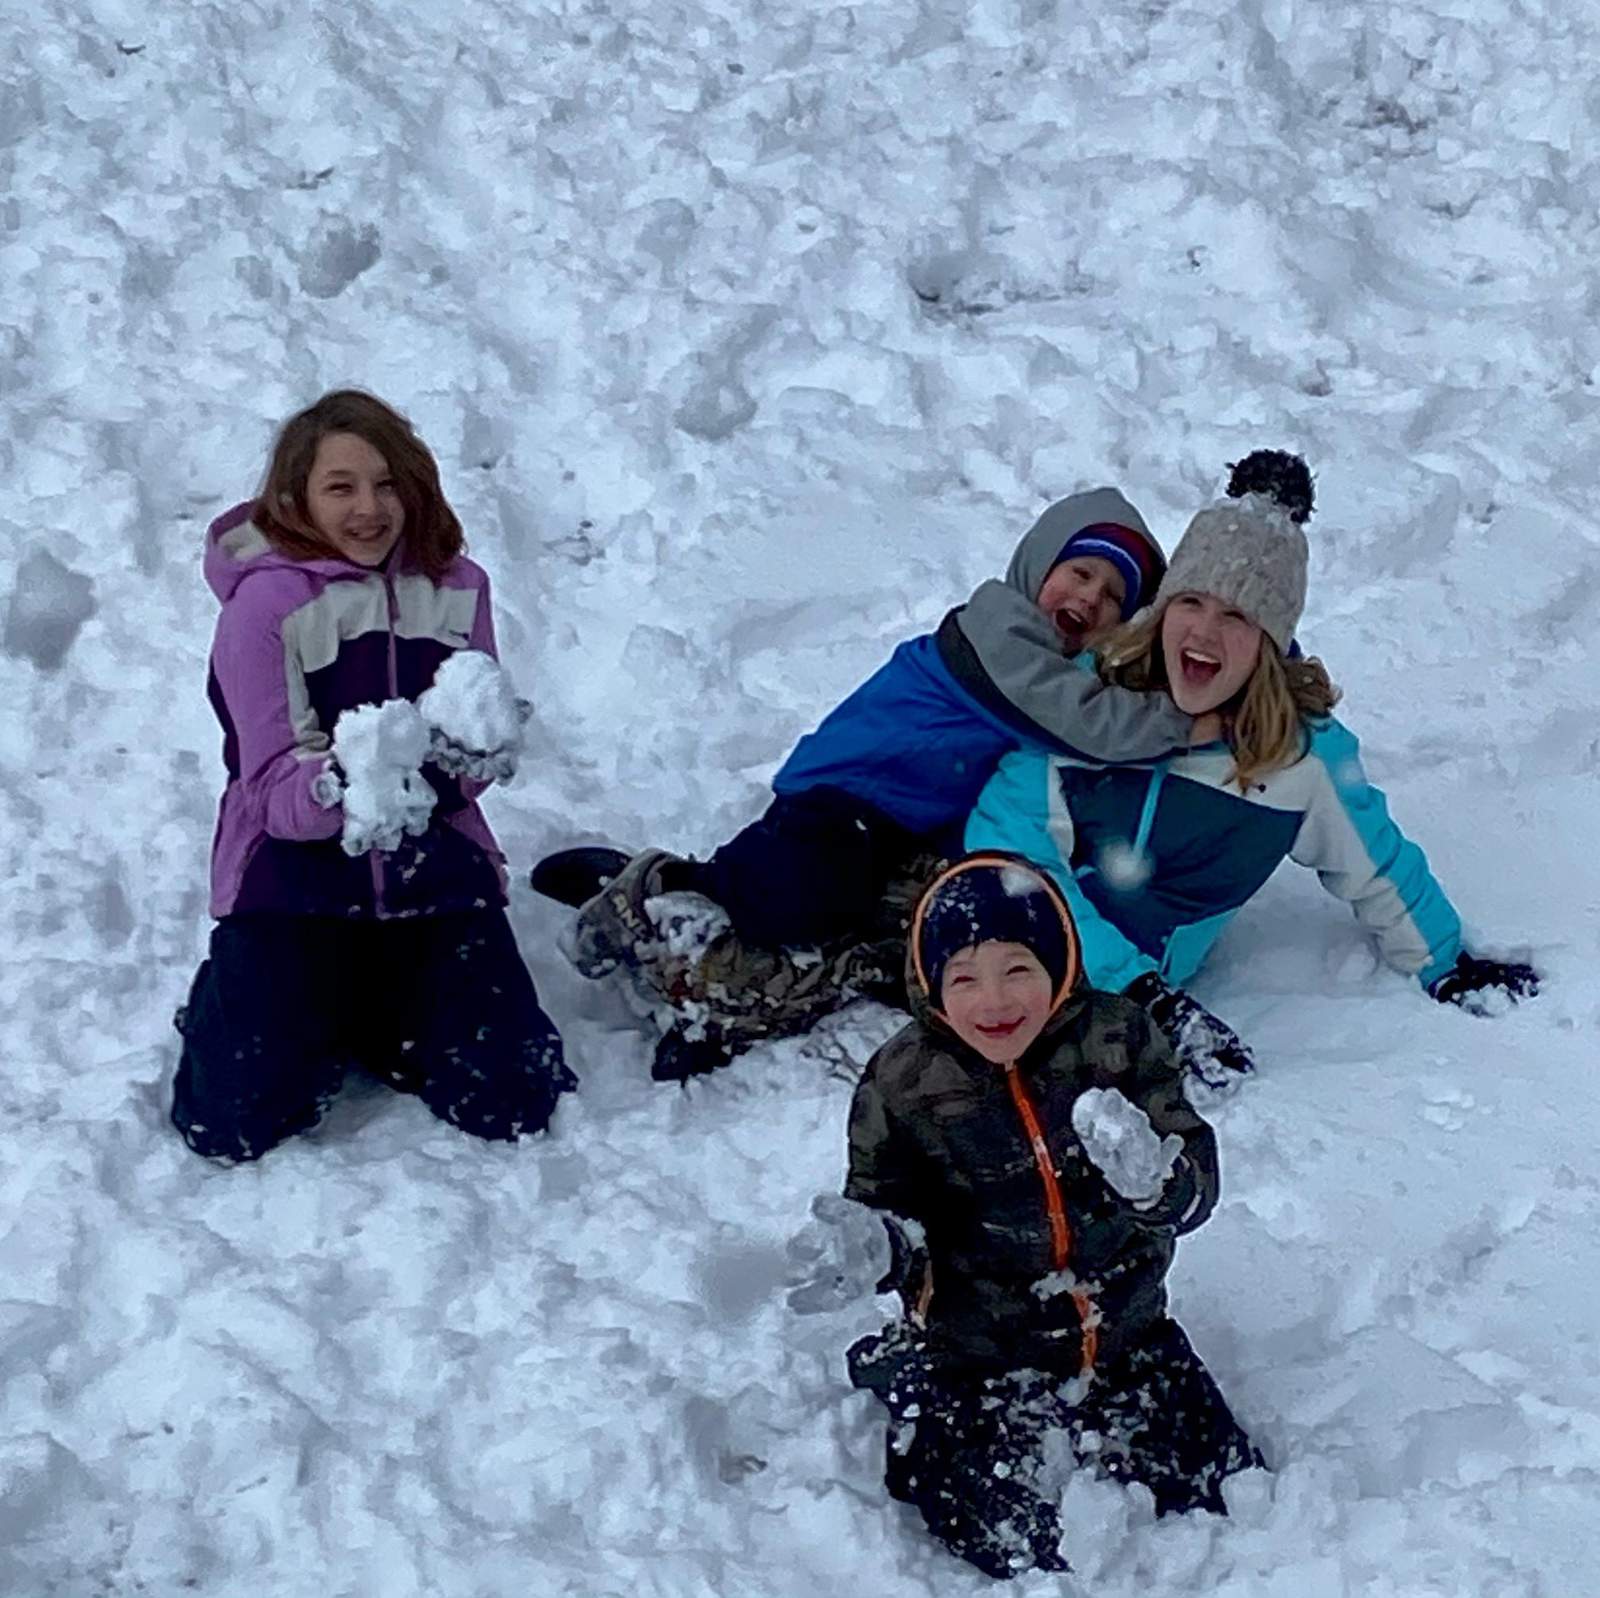 PHOTOS: Kids across Southwest, Central Virginia enjoying Jan. 31 snow day